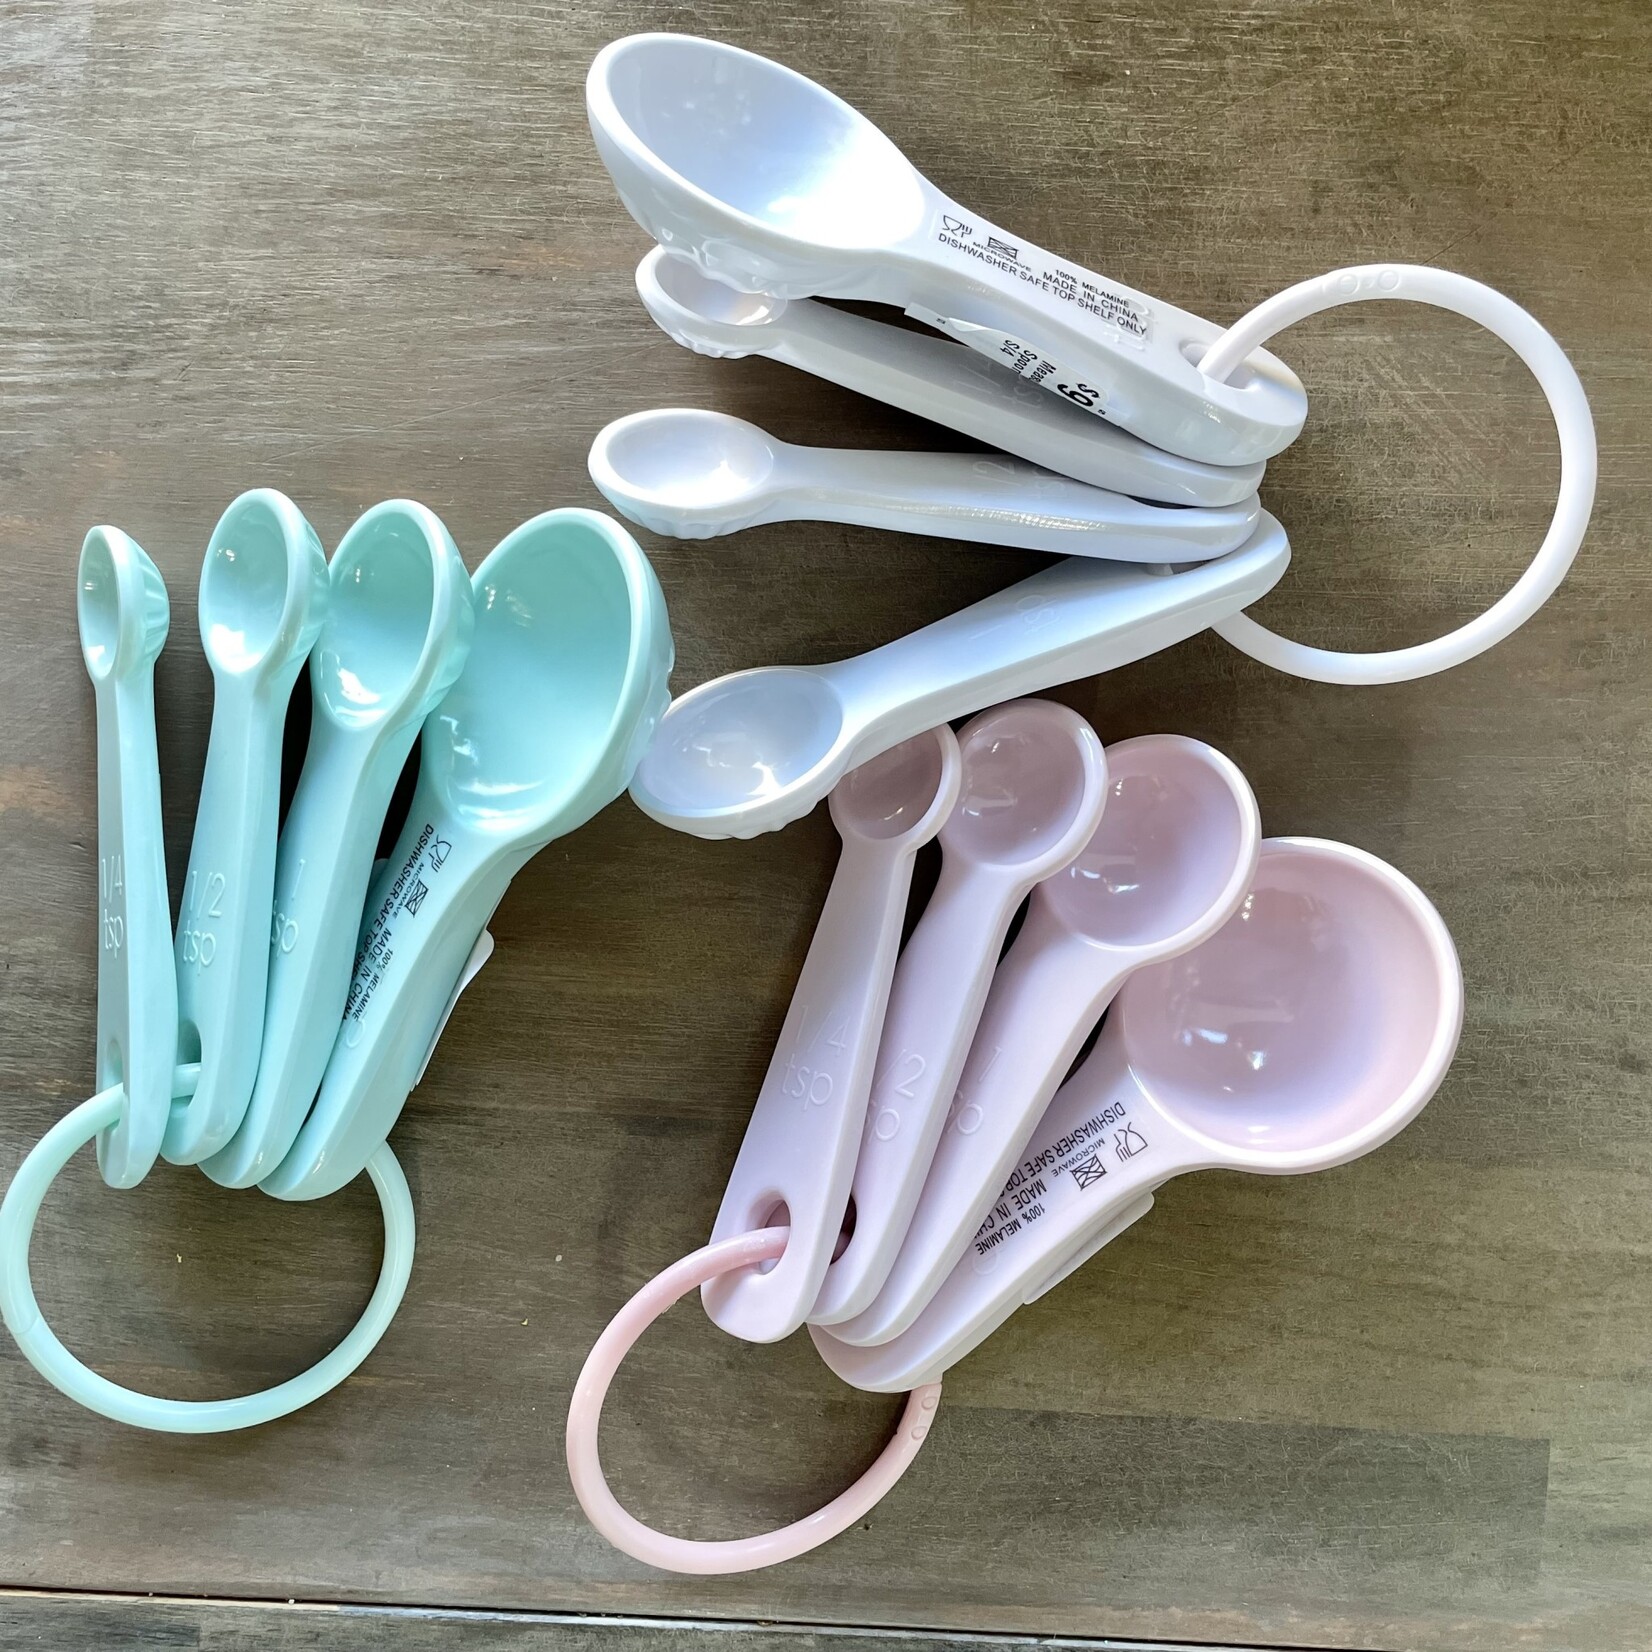 Supreme Housewares Measuring Spoons - White S/4